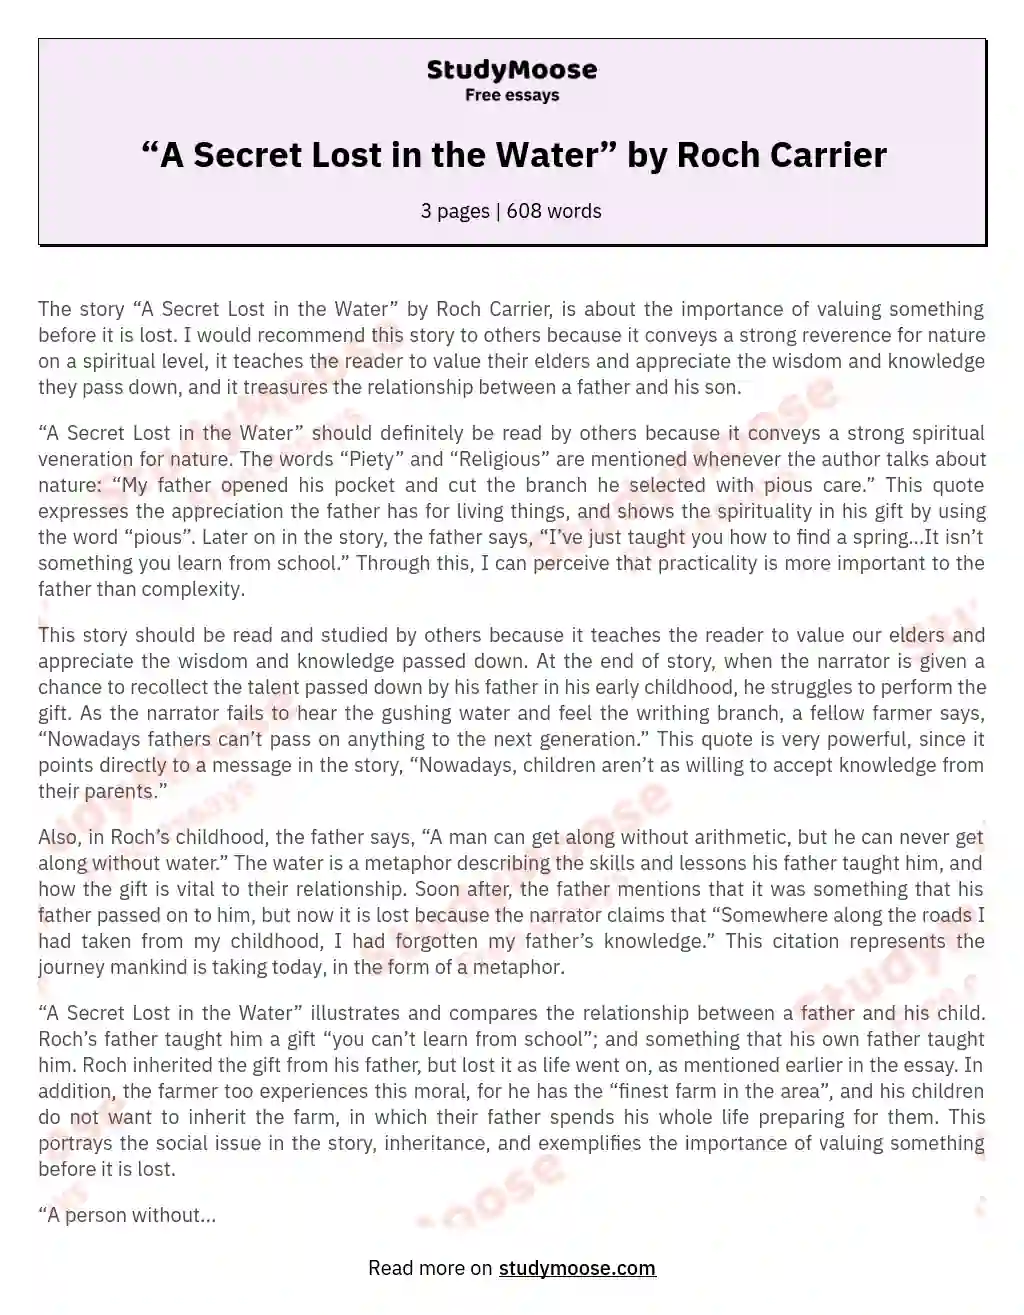 “A Secret Lost in the Water” by Roch Carrier essay